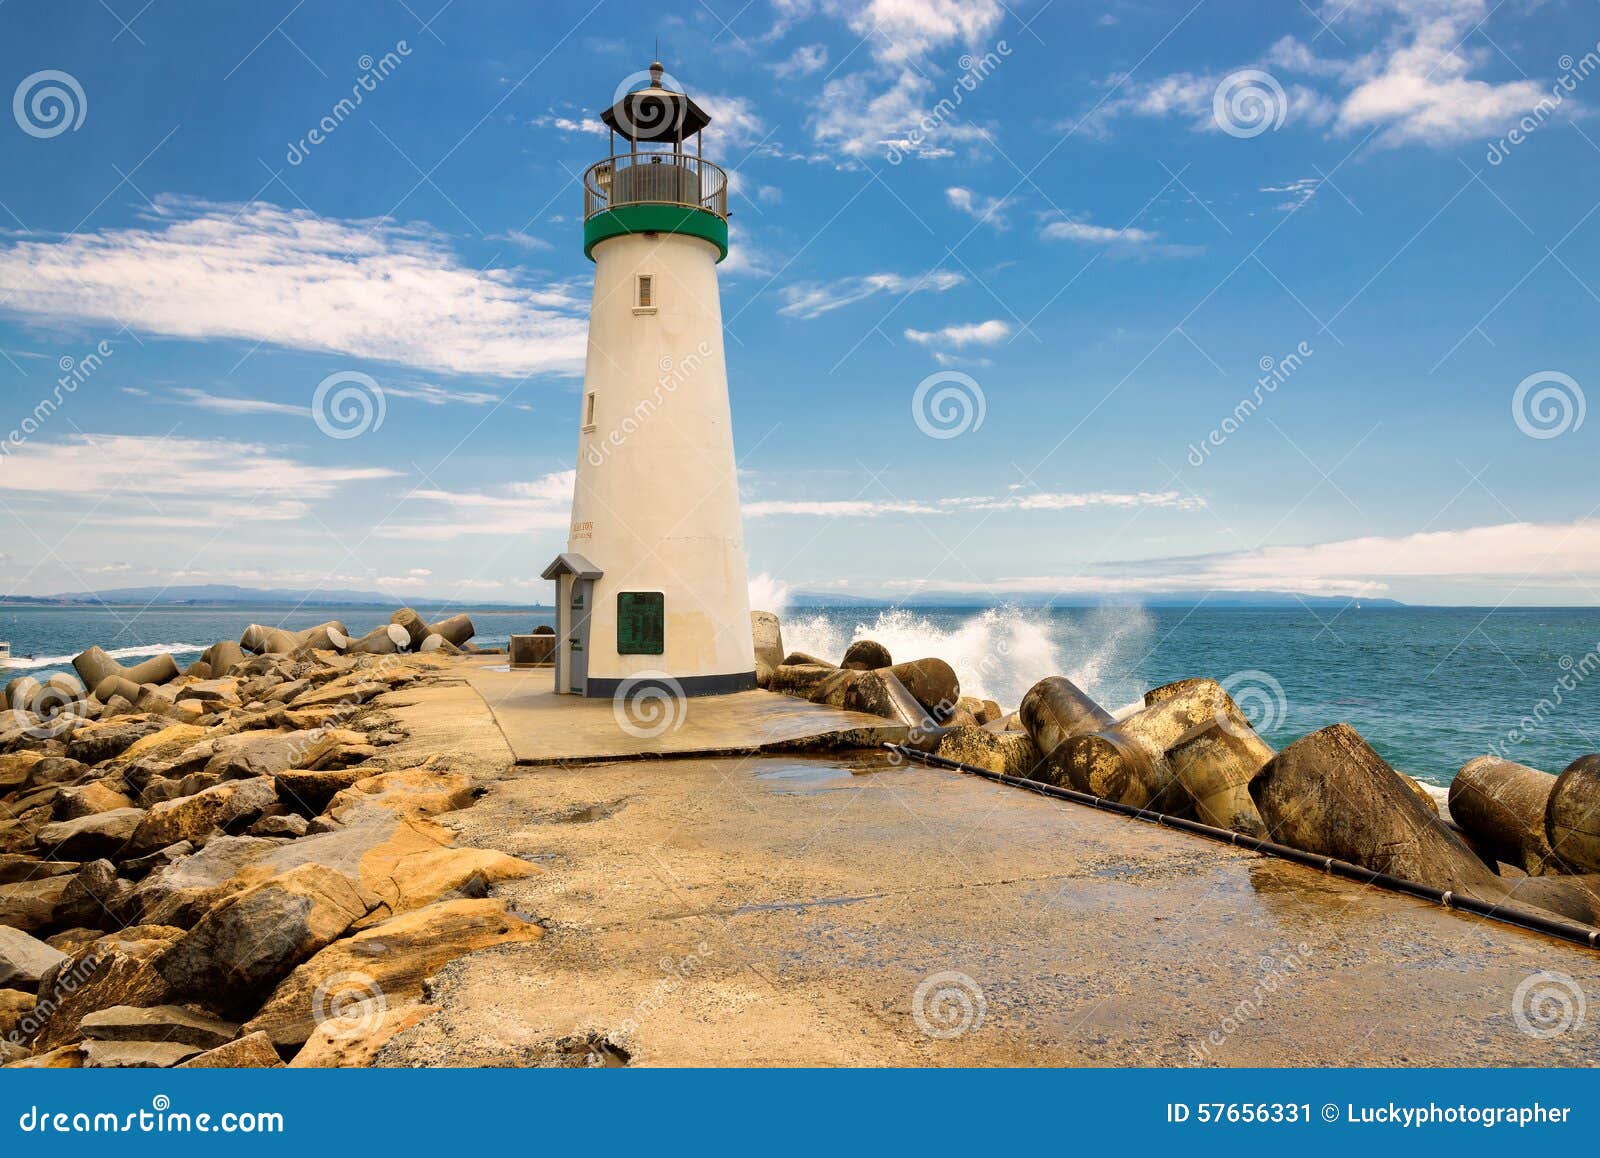 santa cruz breakwater lighthouse, california